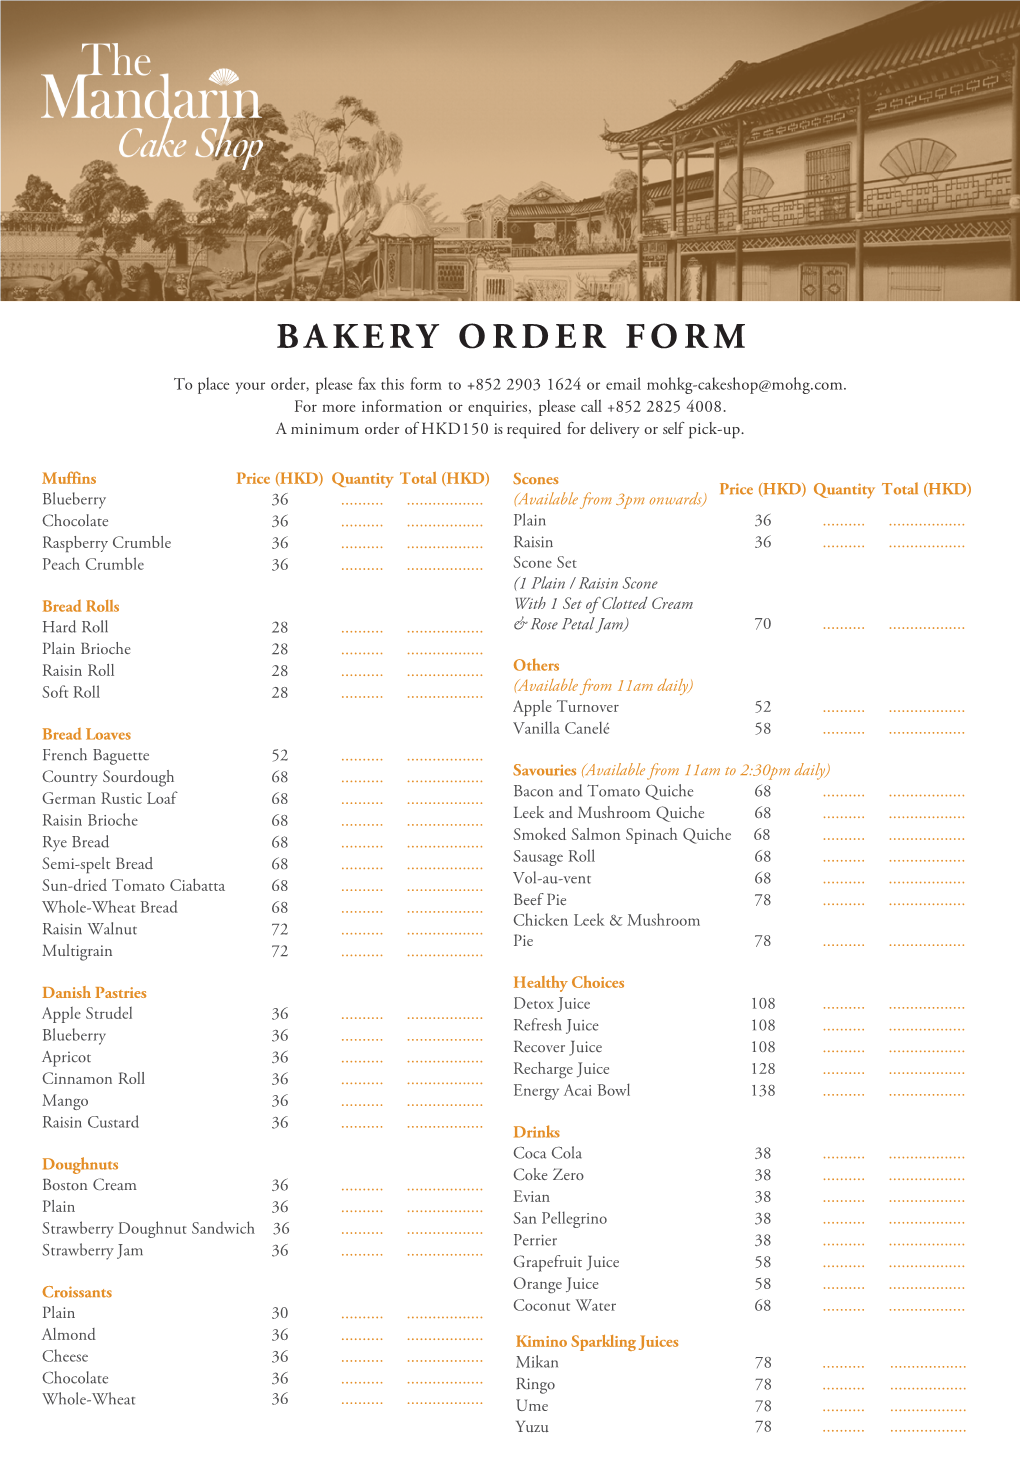 The Mandarin Cake Shop Bakery Order Form 2021